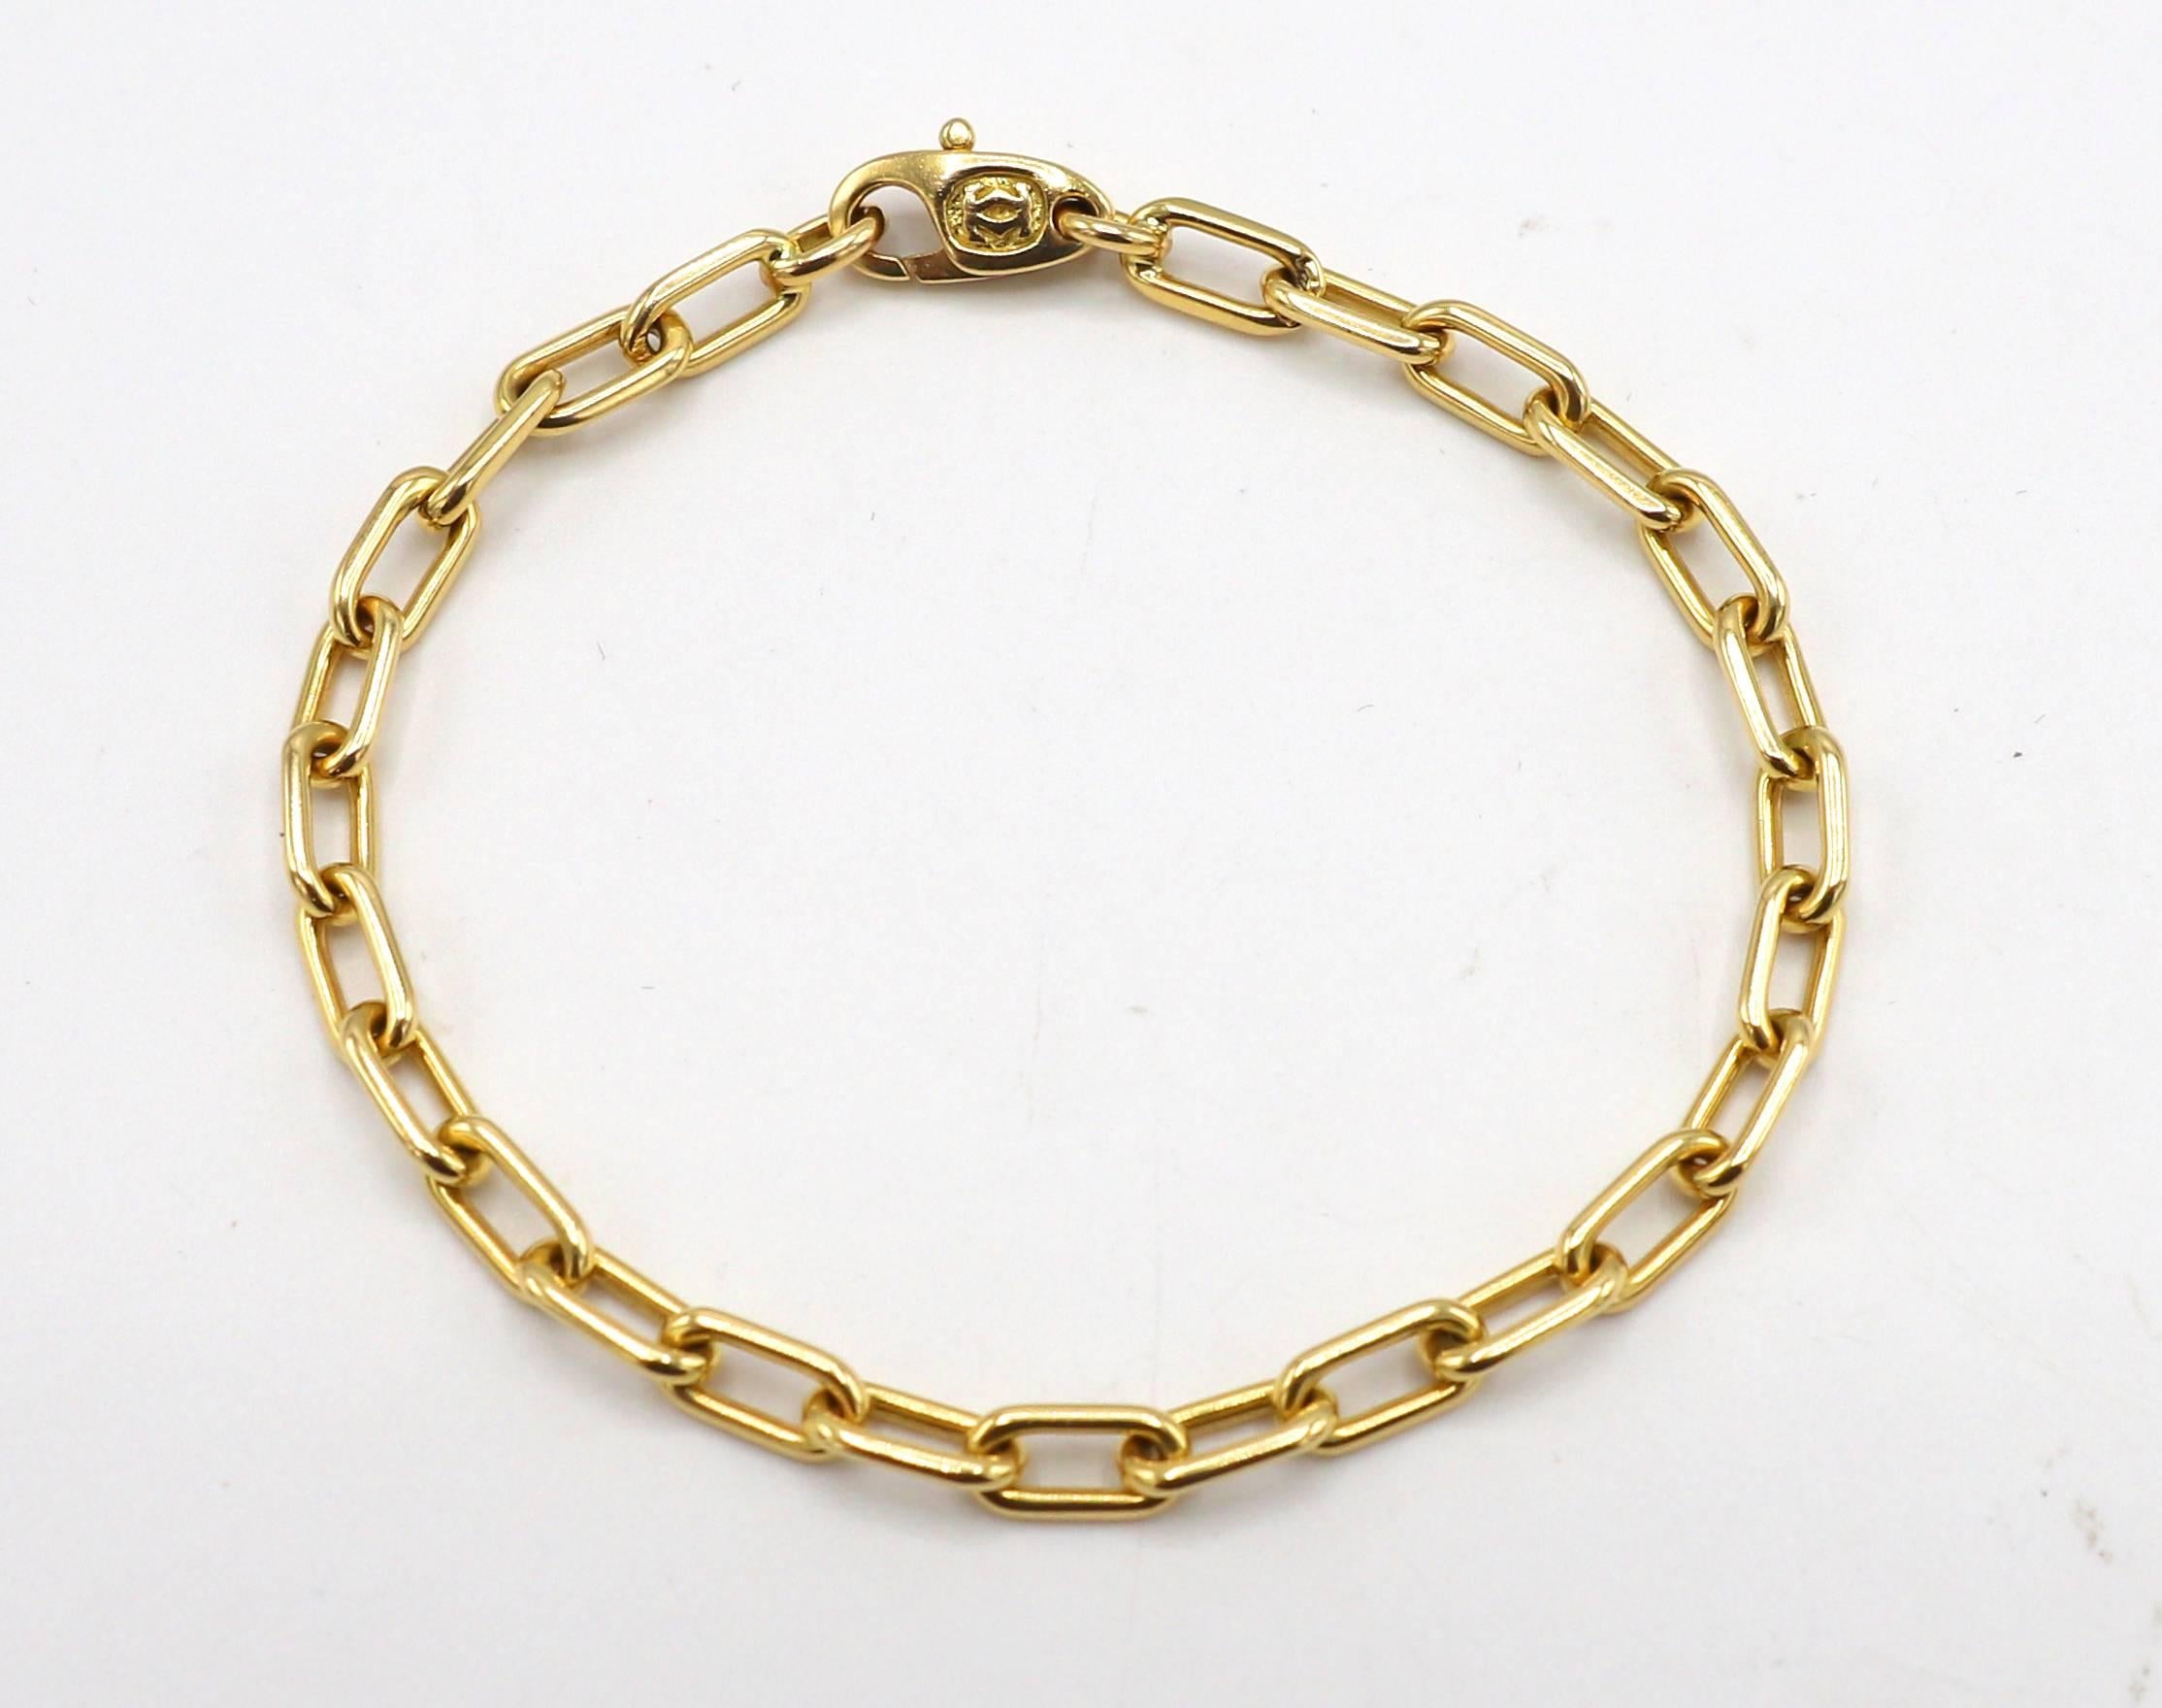 Cartier Spartacus 18 Karat Yellow Gold Oval Chain Link Bracelet 
Metal: 18 karat yellow gold
Weight: 10.54 grams
Length: 7.25 inches
Links: 4.5 x 9mm